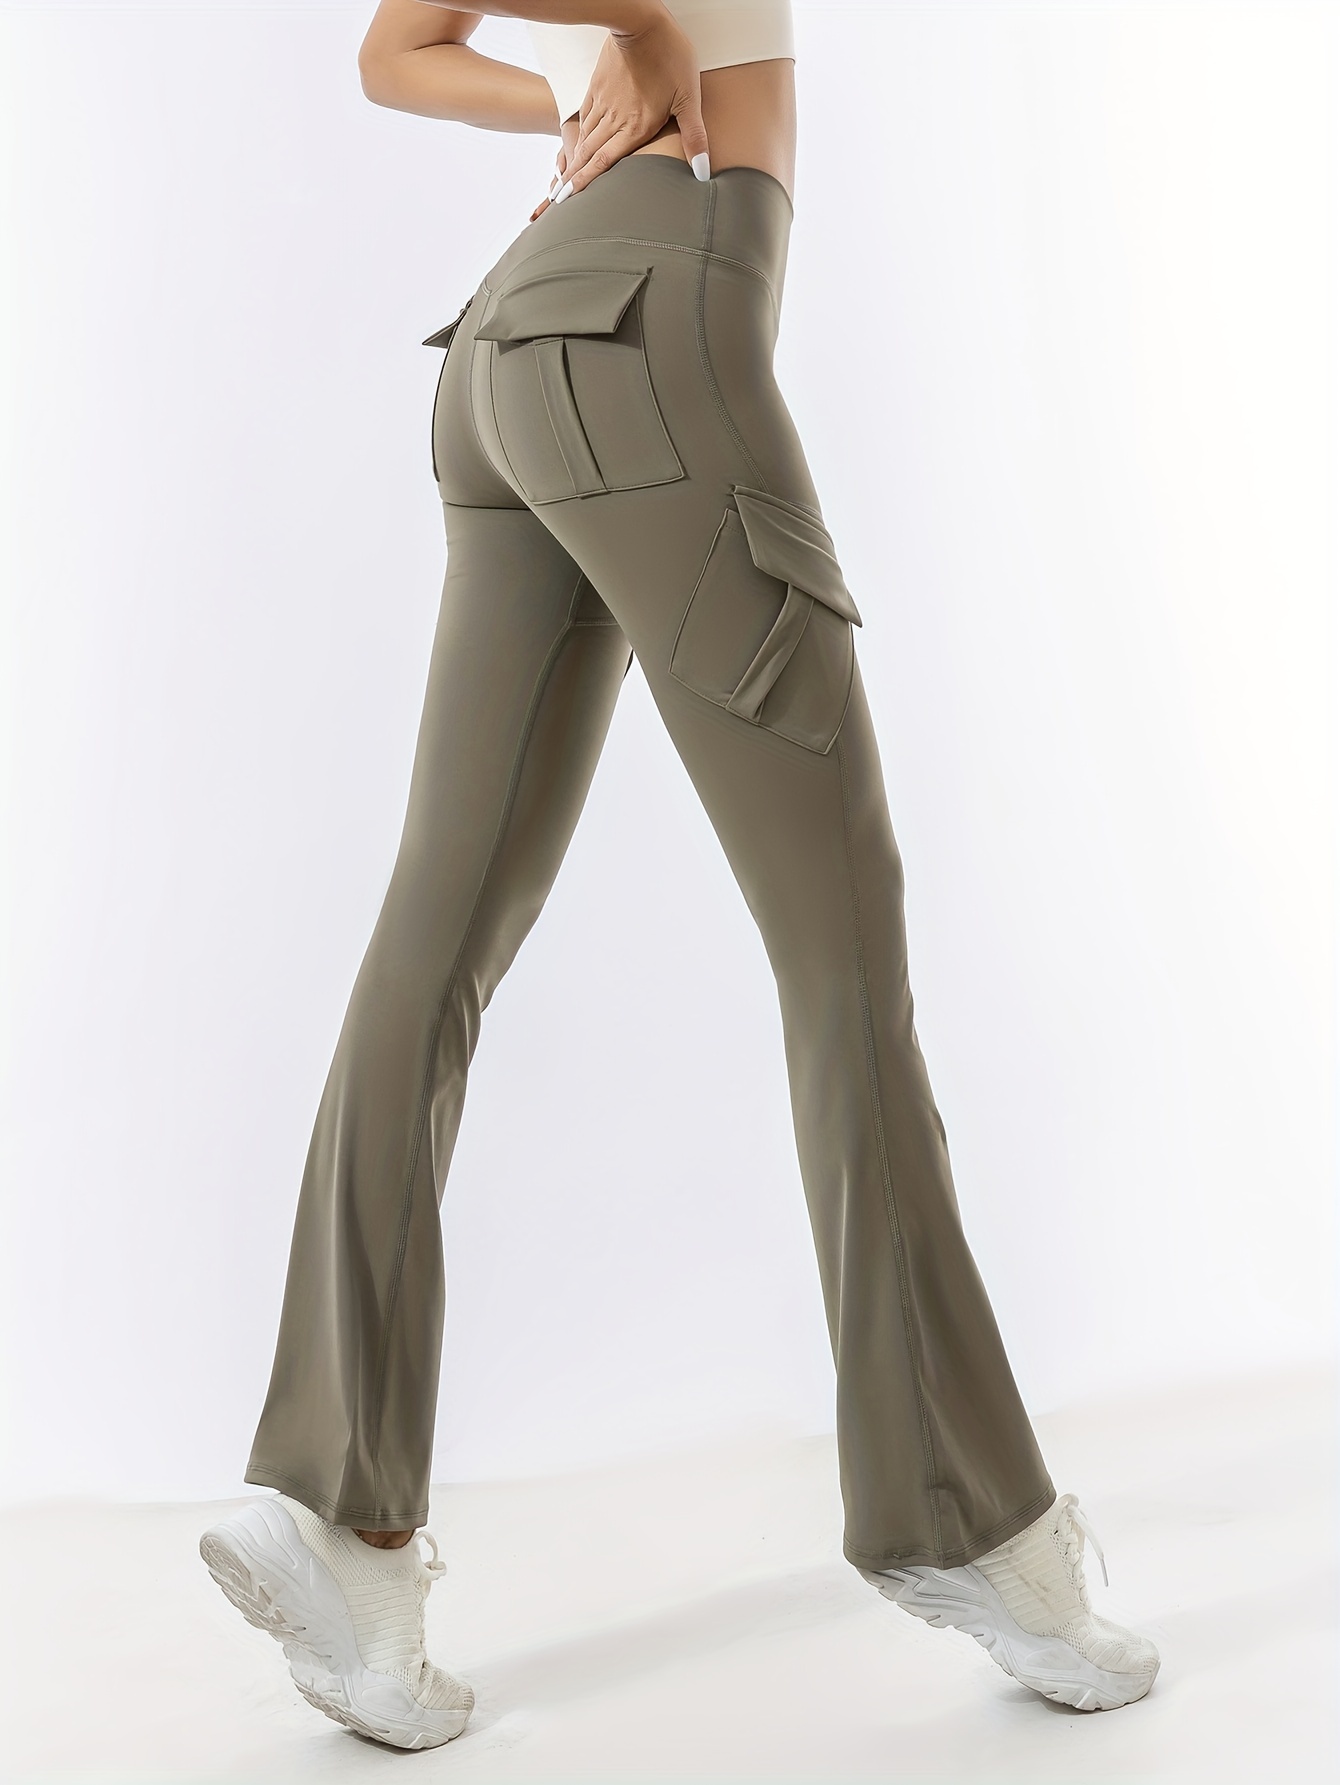 High Waist Honeycomb Yoga Leggings - Textured Corset Design for Women's  Fitness and Activewear